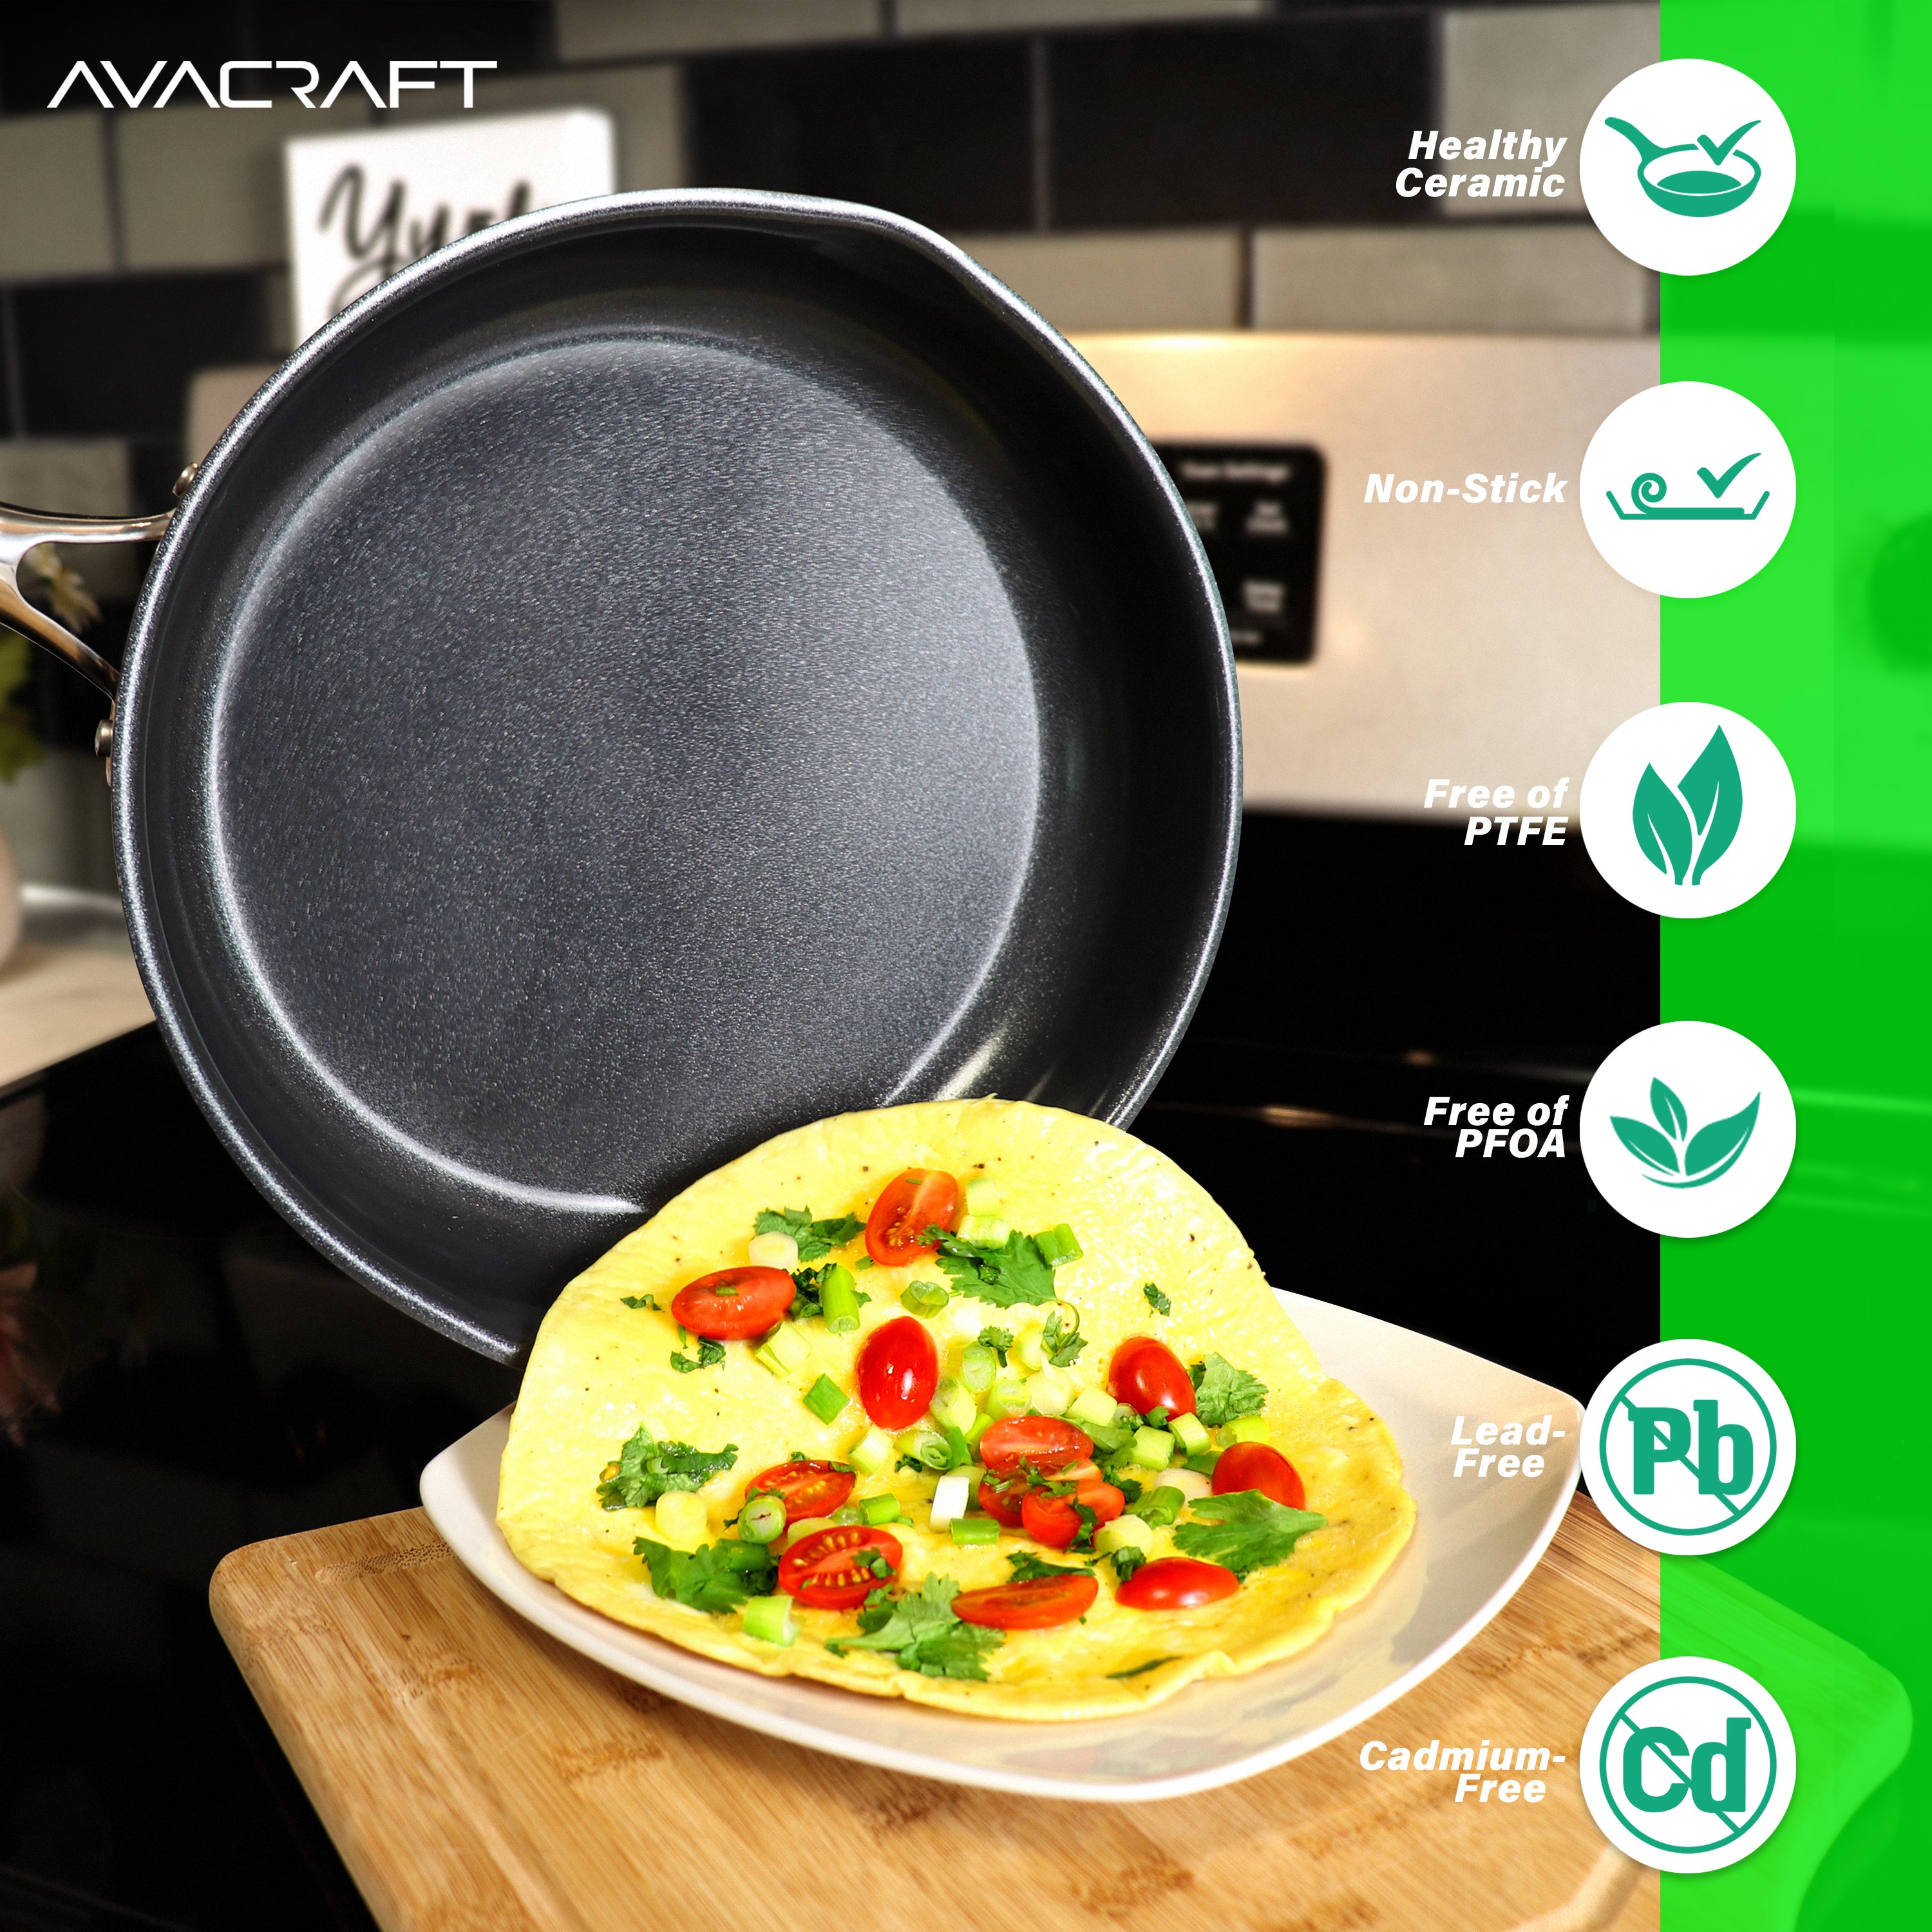  AVACRAFT Ceramic Nonstick Frying Pan with Lid, Egg Pan, Ceramic  Nonstick Skillet, 100% PFOA, PTFE Toxins Free Cooking Pan, Best Ceramic Pans  for Cooking (10 Inch Non-Stick Frying Pan): Home 